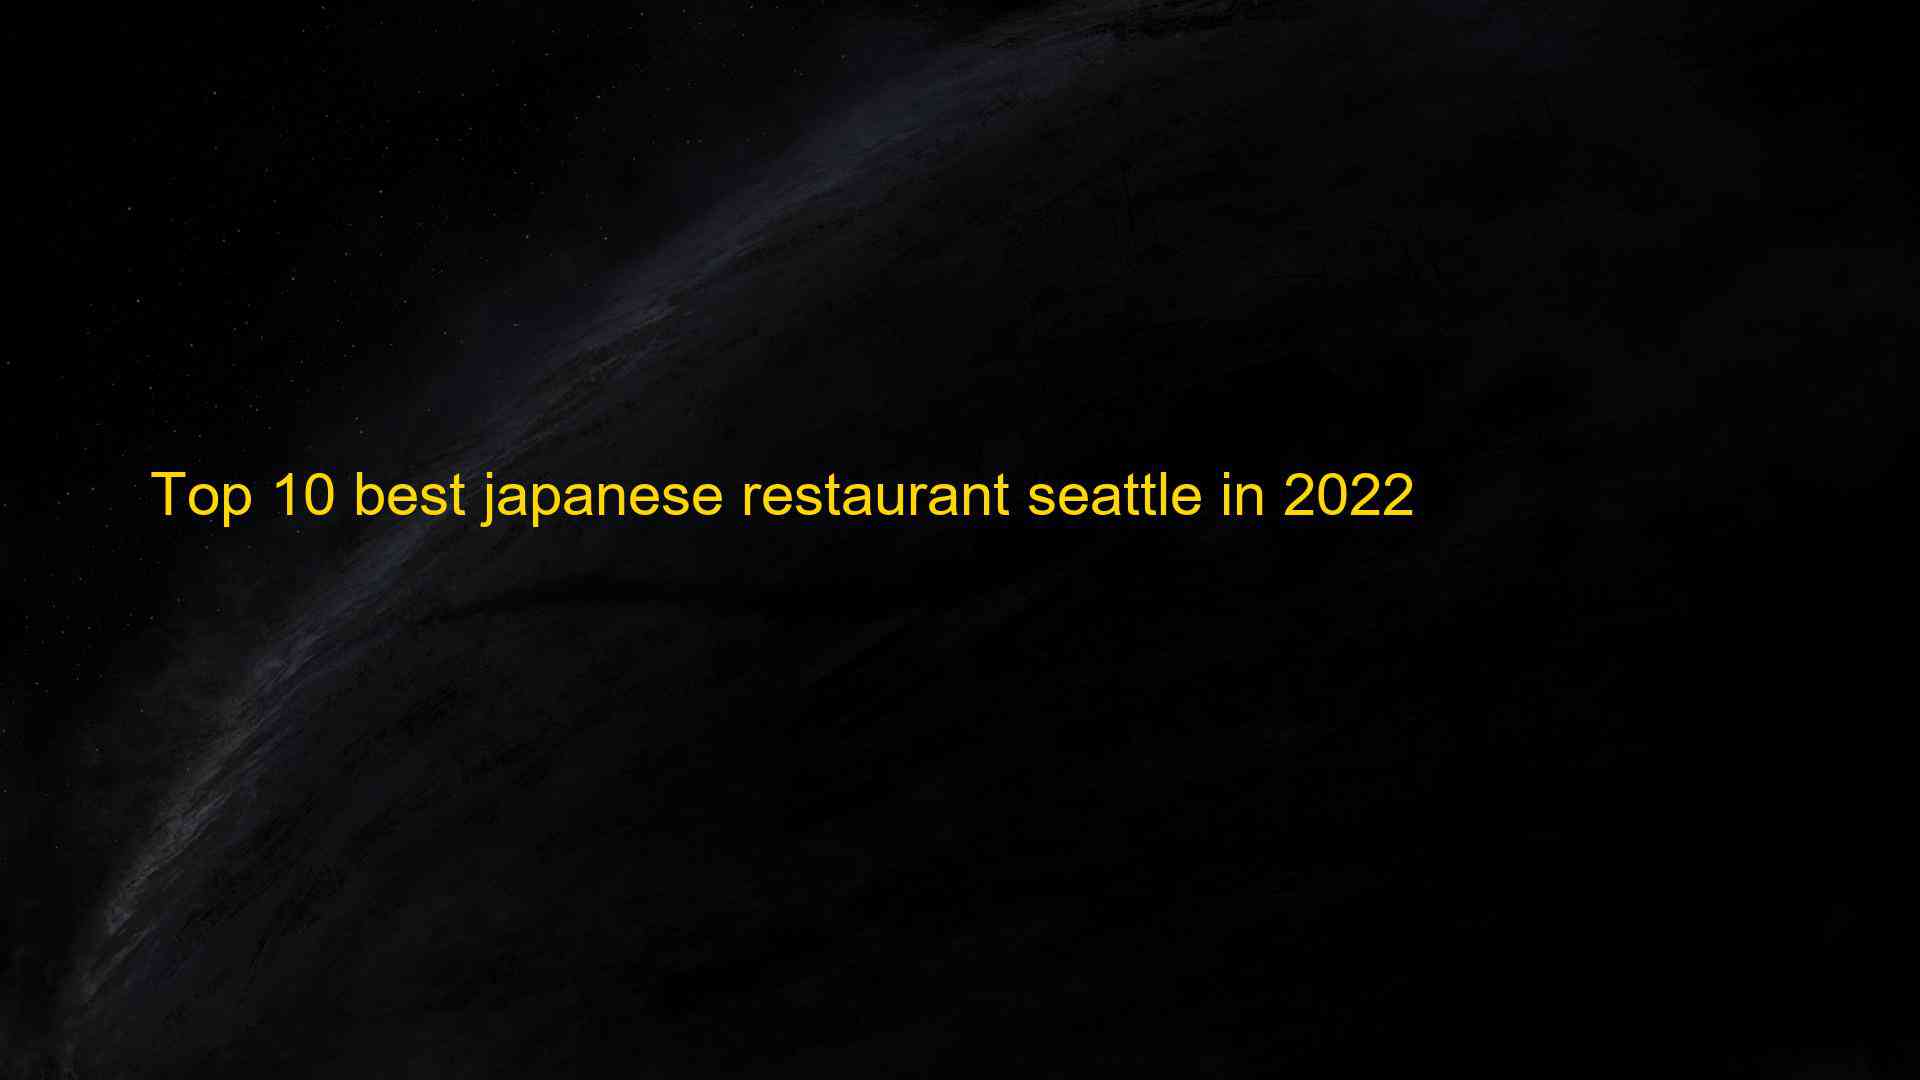 Top 10 best japanese restaurant seattle in 2022 1662841534